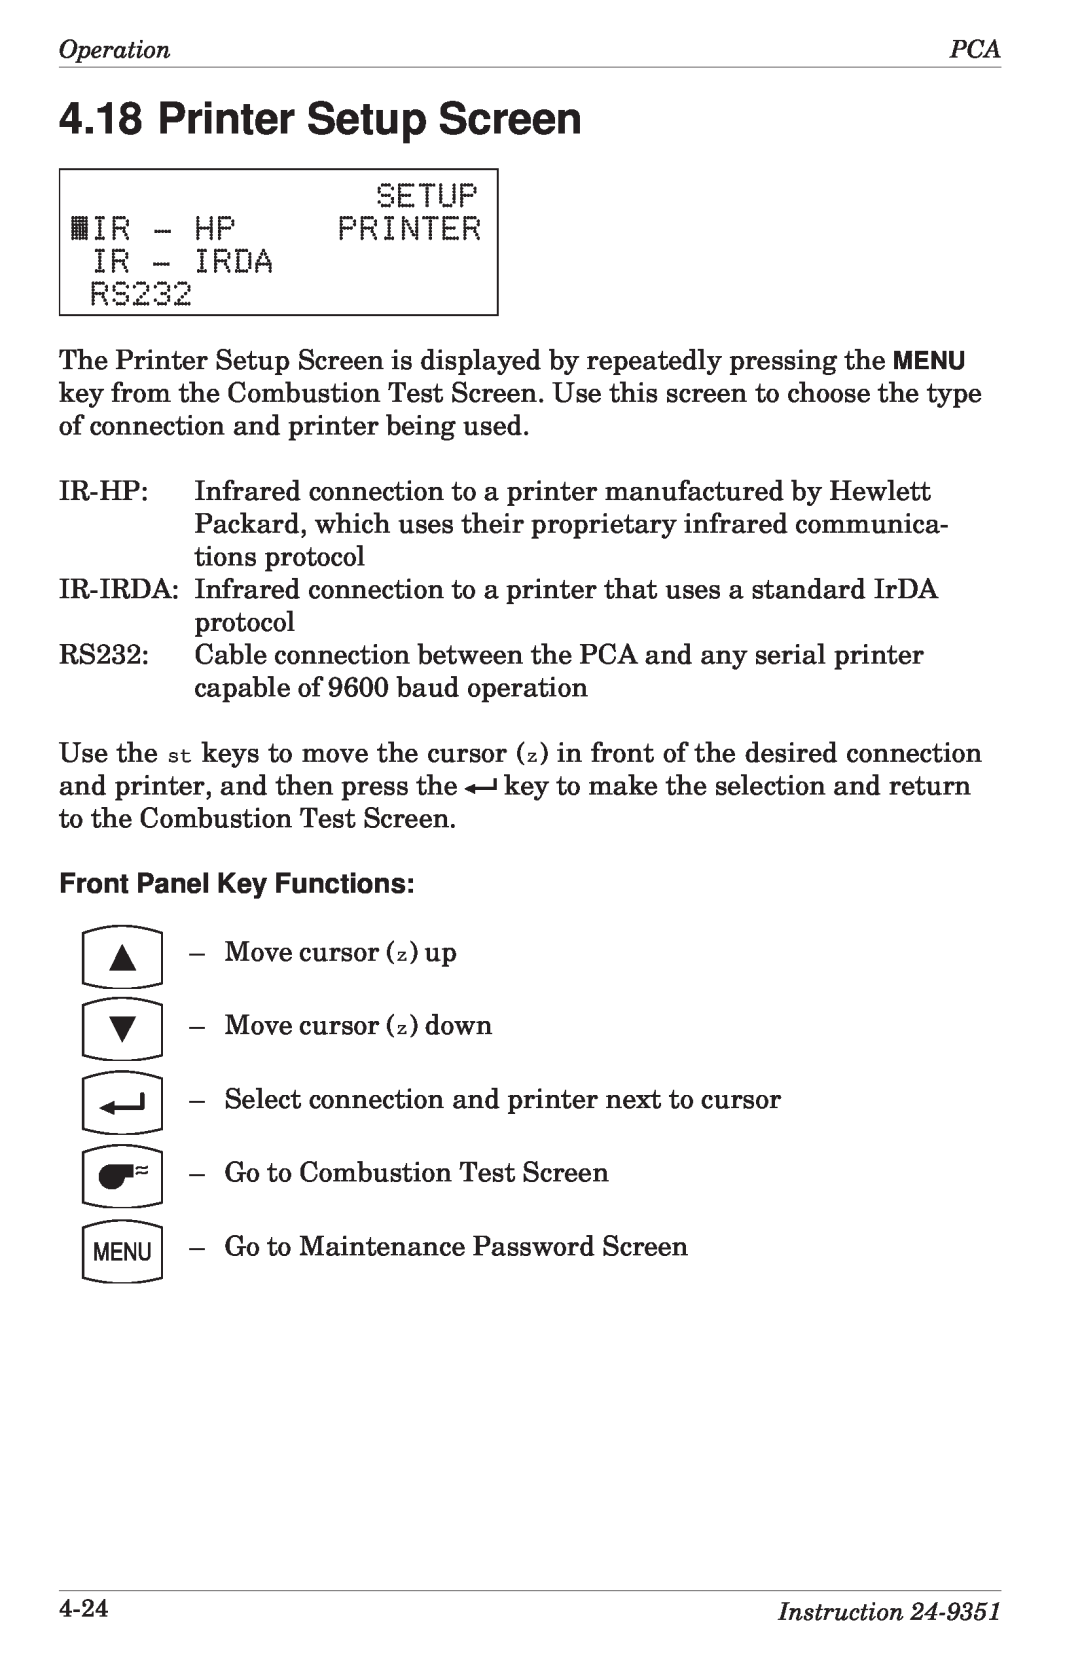 Bacharach 24-9351 manual Printer Setup Screen, SETUP «IR - HP PRINTER IR - IRDA RS232, Front Panel Key Functions 